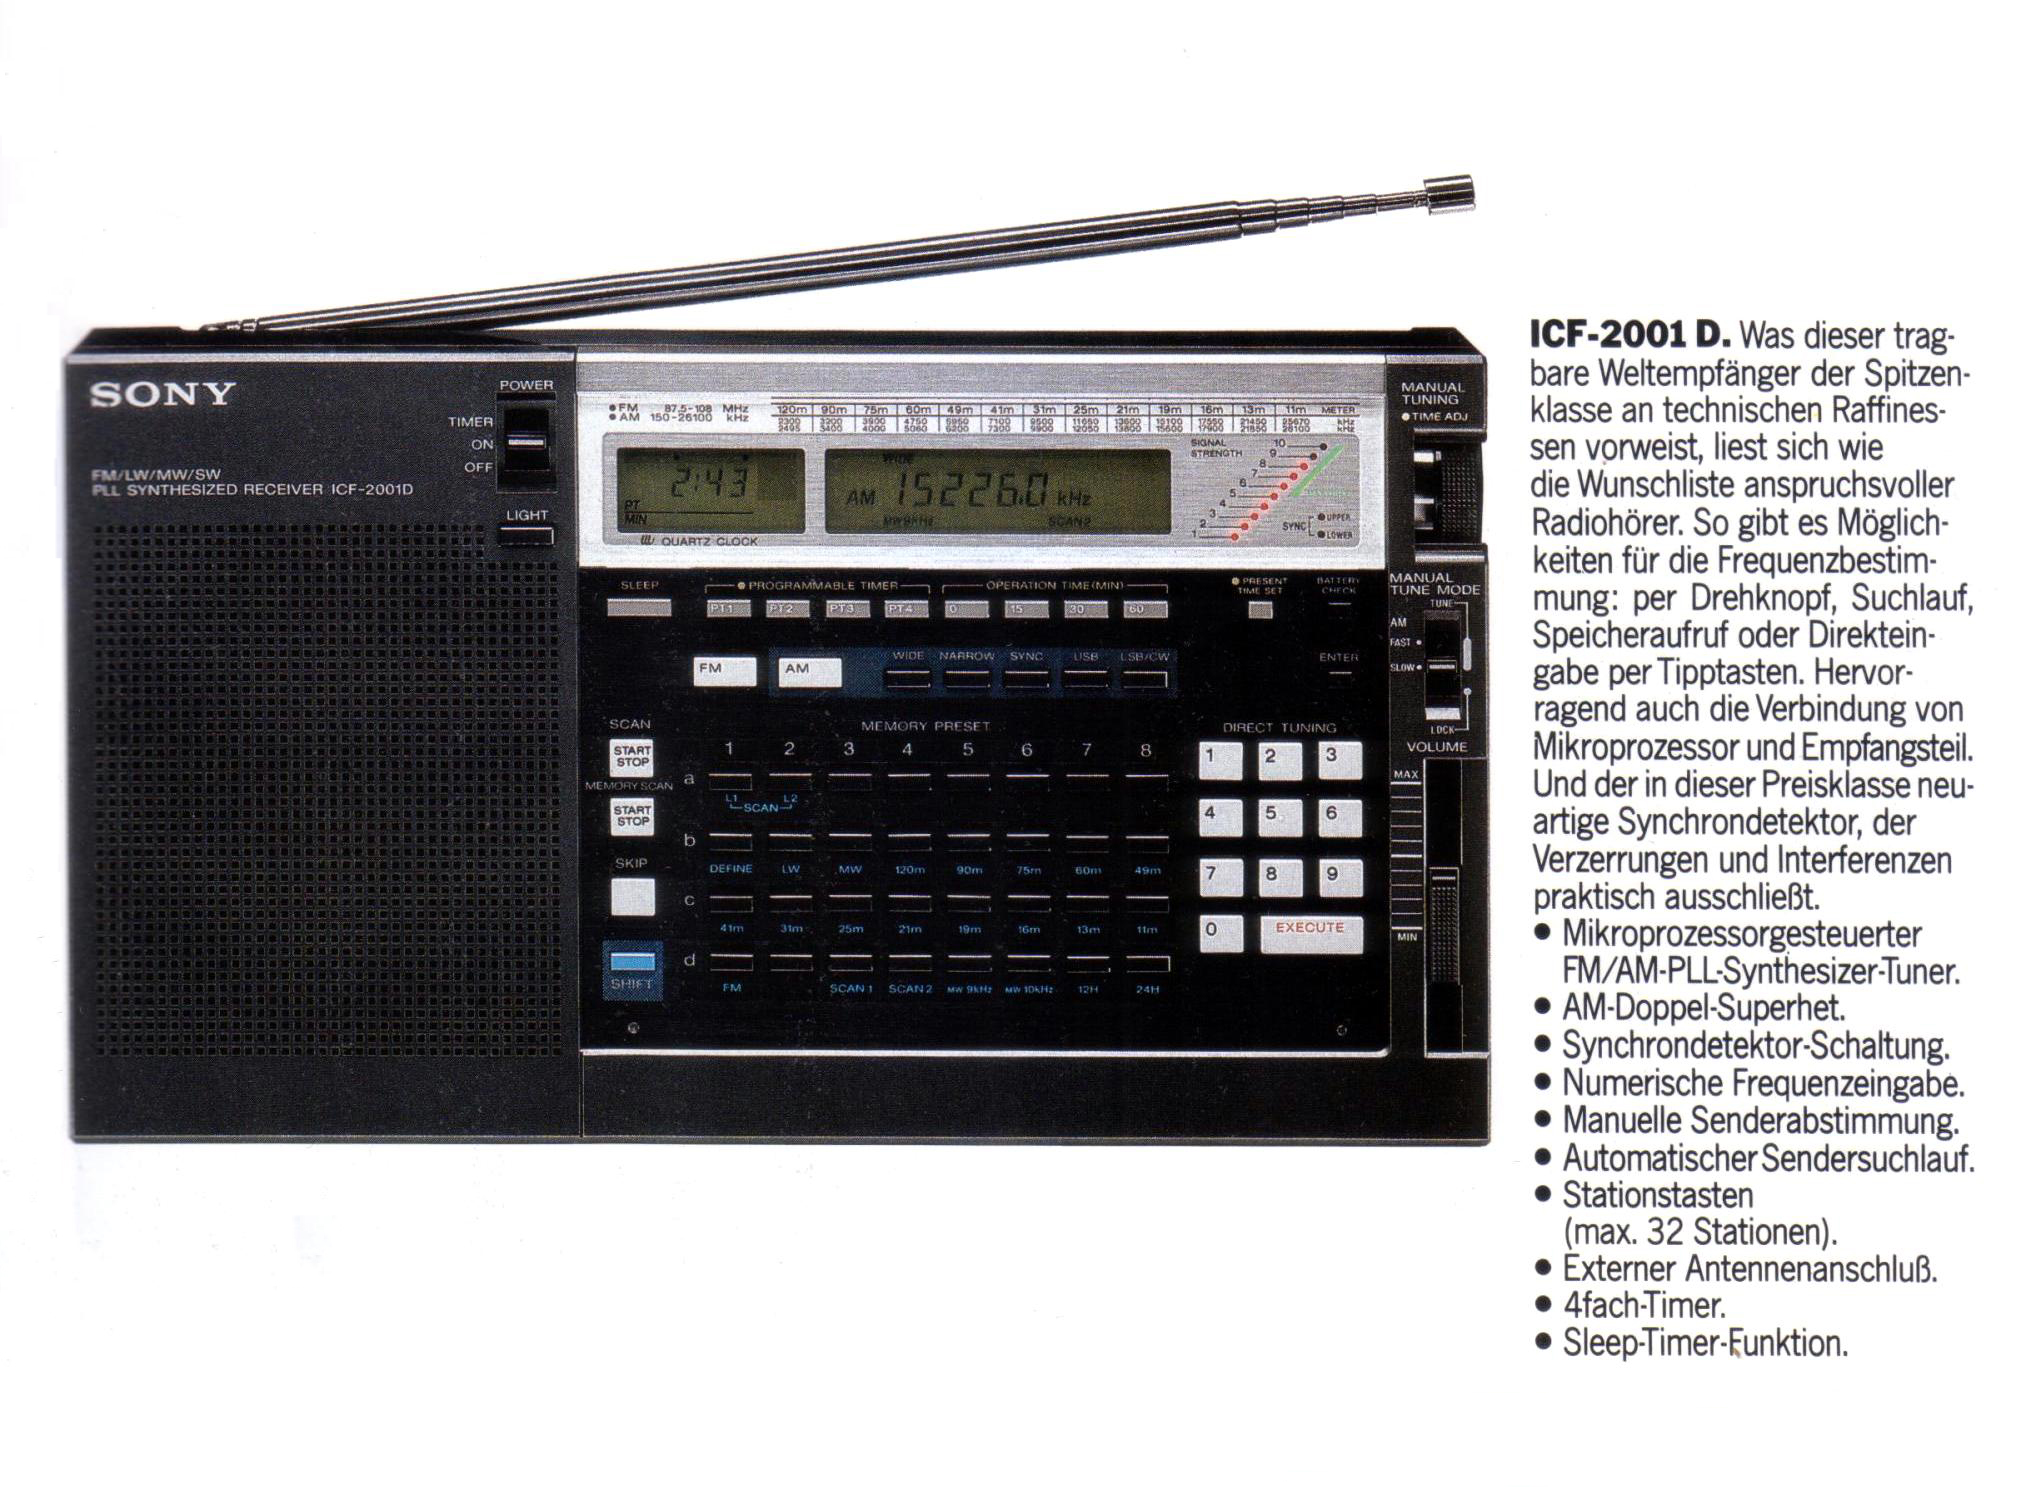 Sony ICF-2001 D-Prospekt-1986.jpg